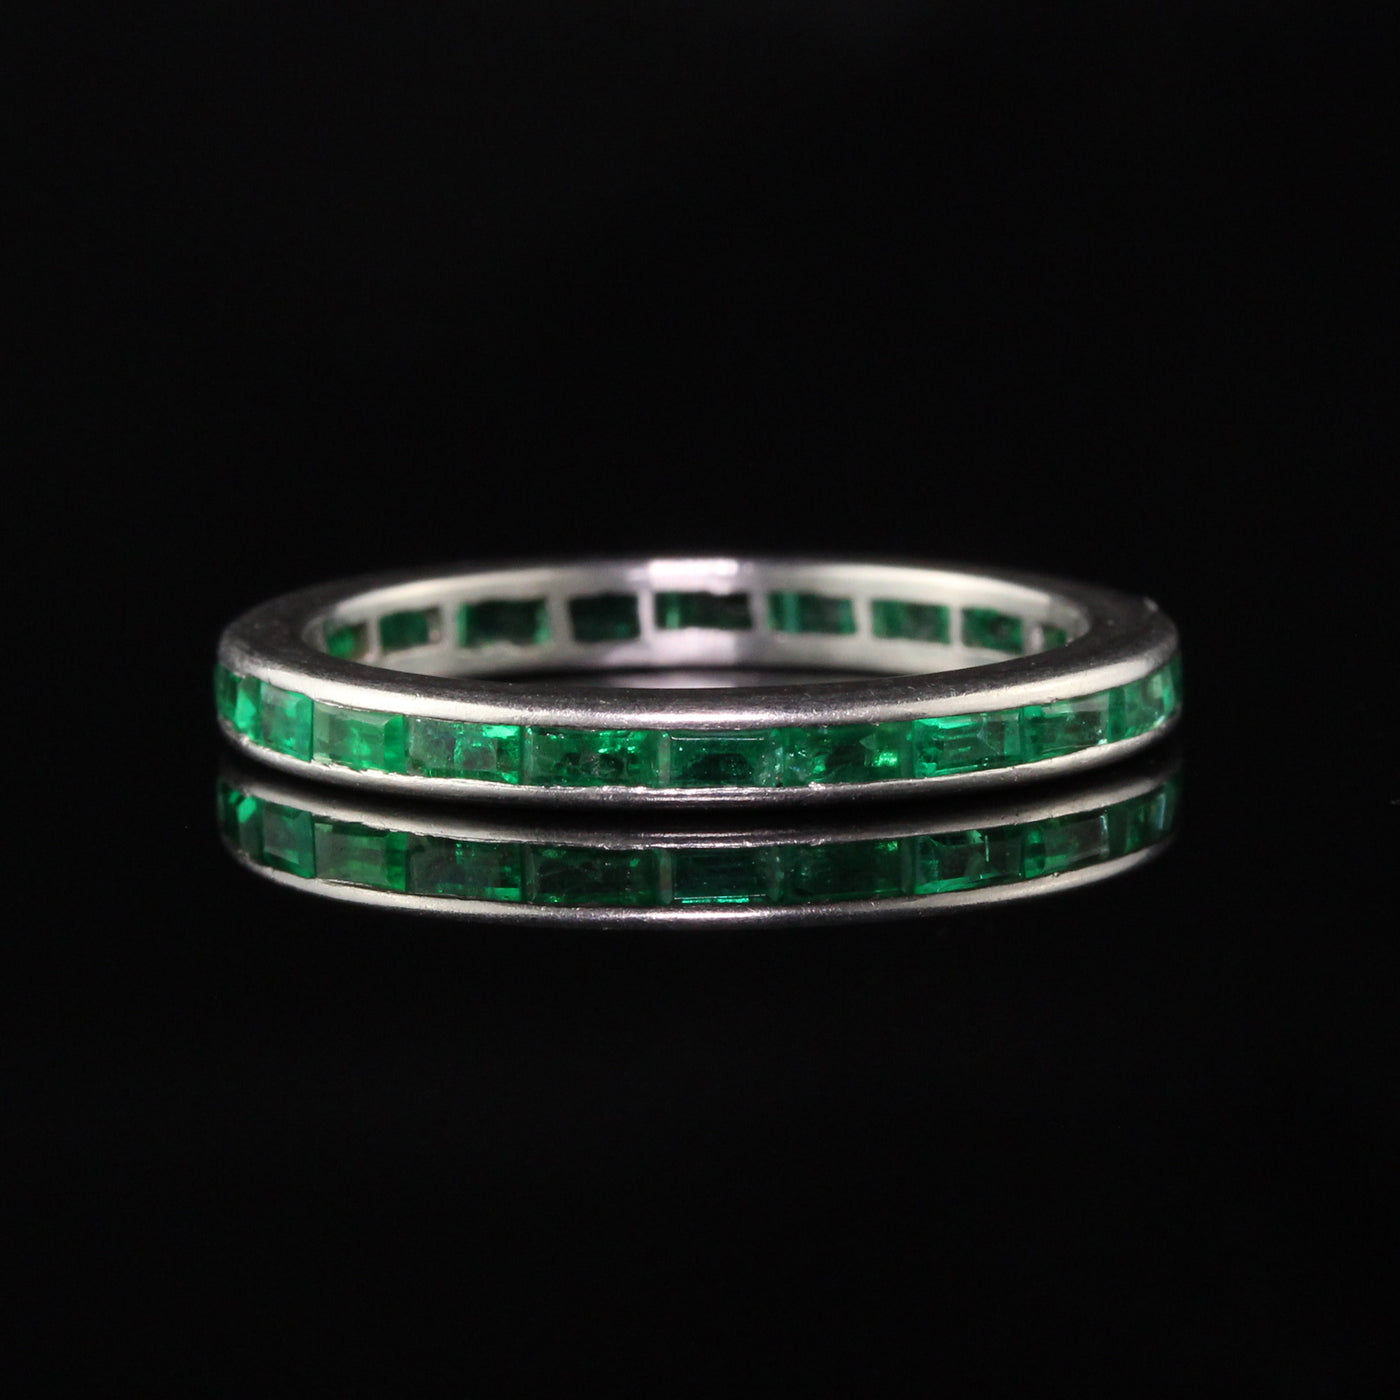 Antique Art Deco Platinum Emerald Eternity Wedding Band - Size 7 1/2